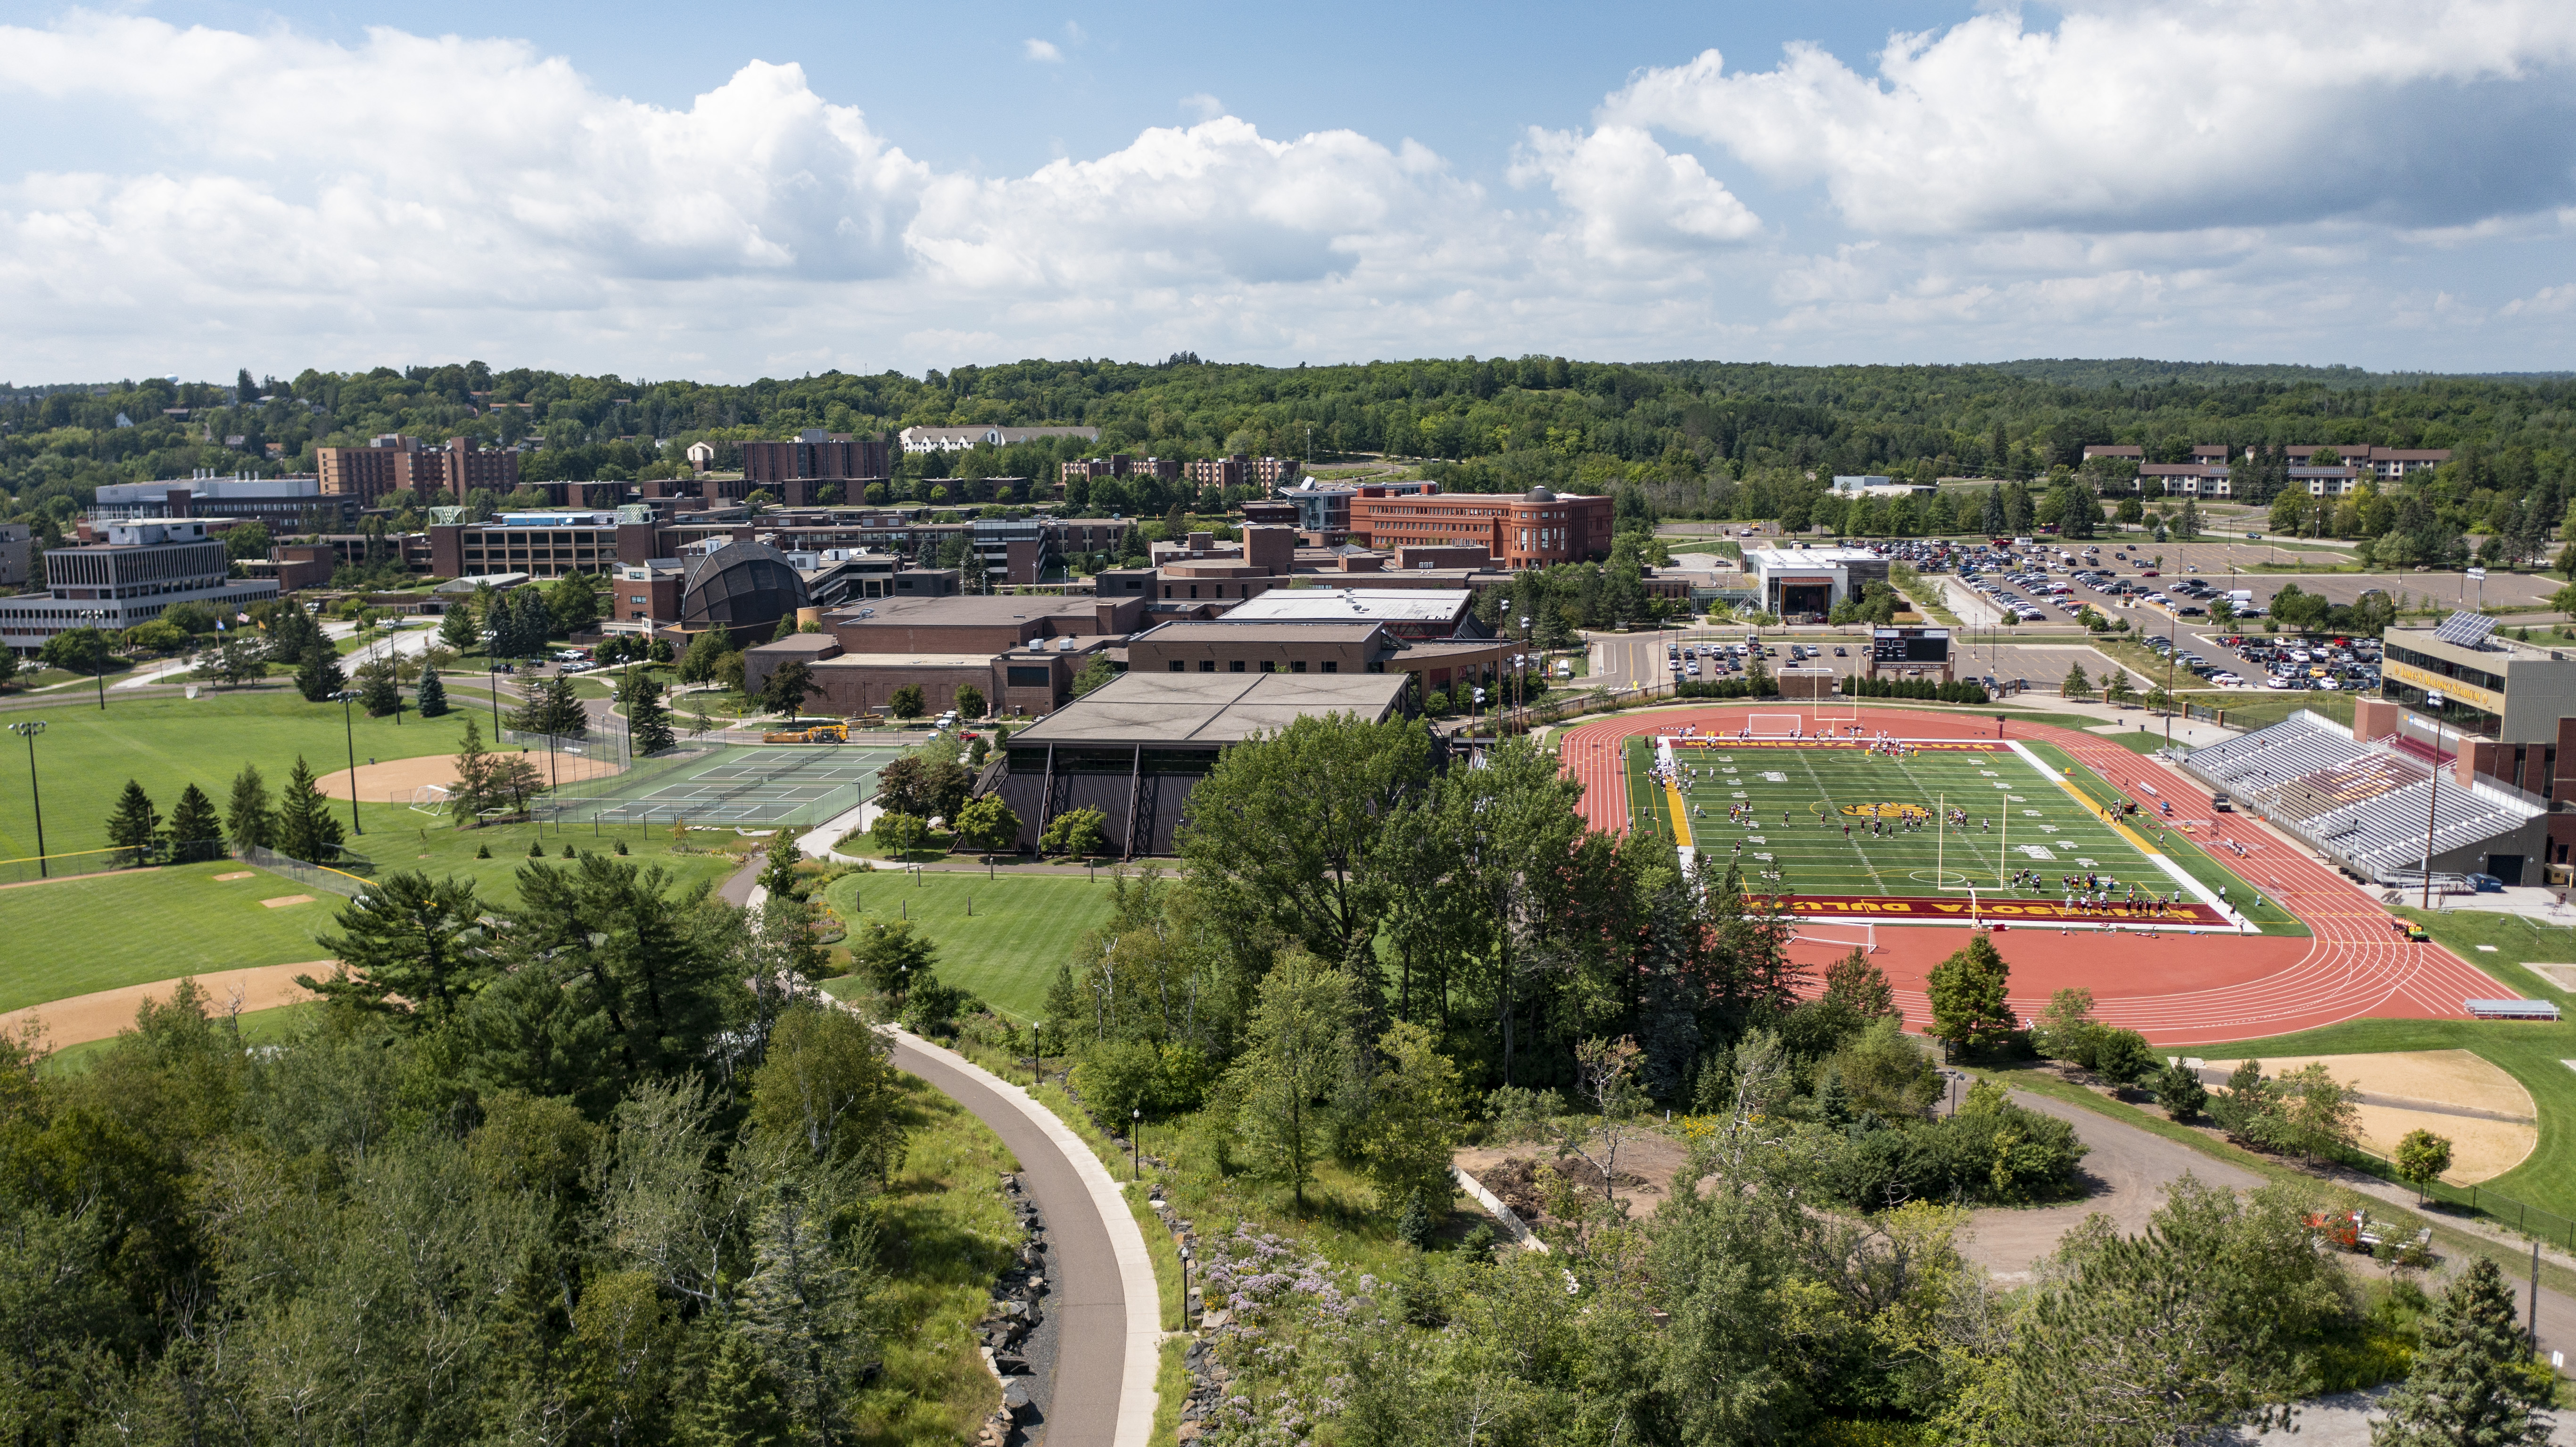 Bluestone Walkway Drone Photo of Campus